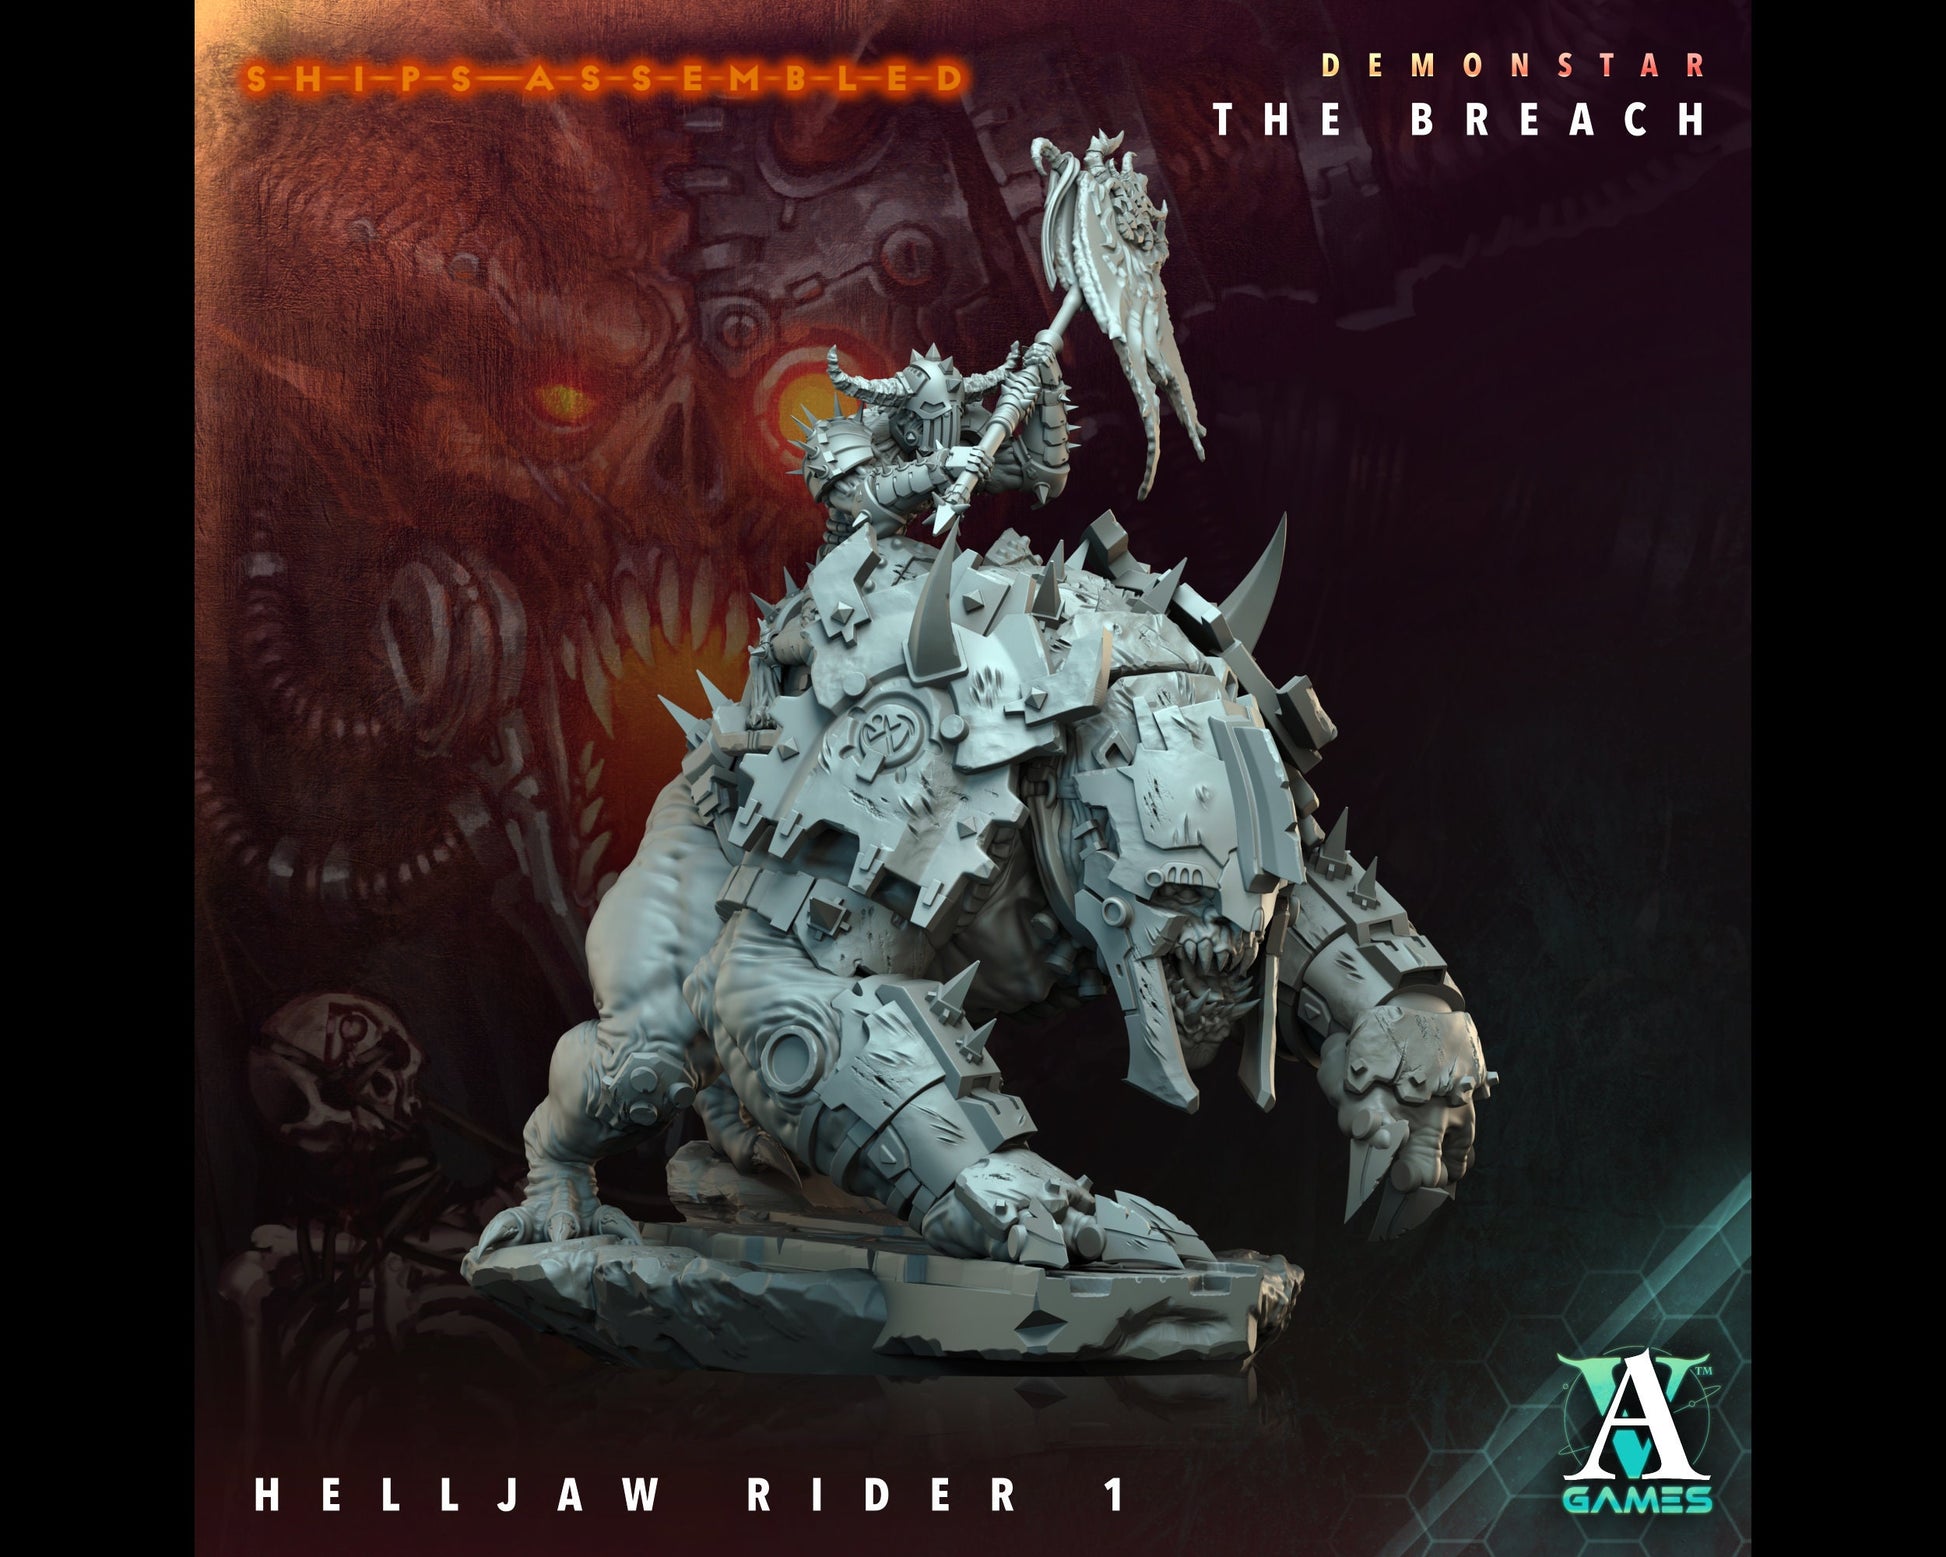 Helljaw Rider 1 - Demonstar: The Breach - Highly Detailed Resin 8k 3D Printed Miniature